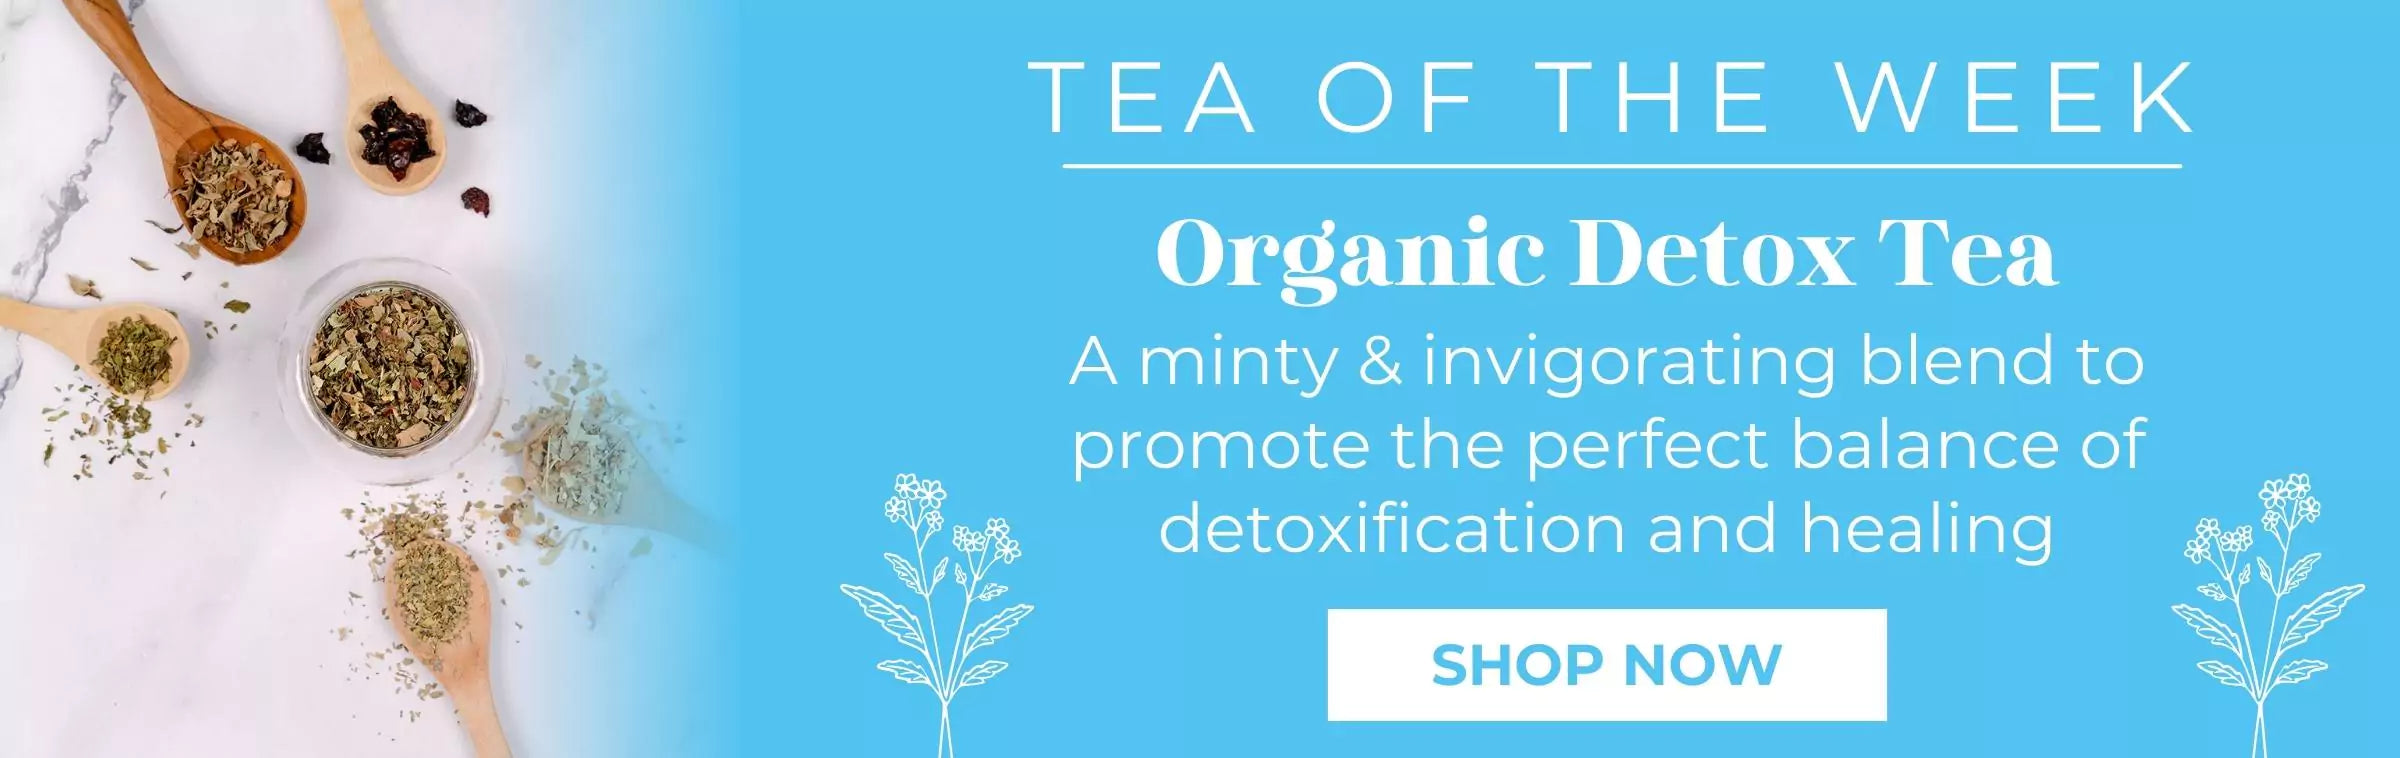 Detox tea totw site 66103dbfd0dac